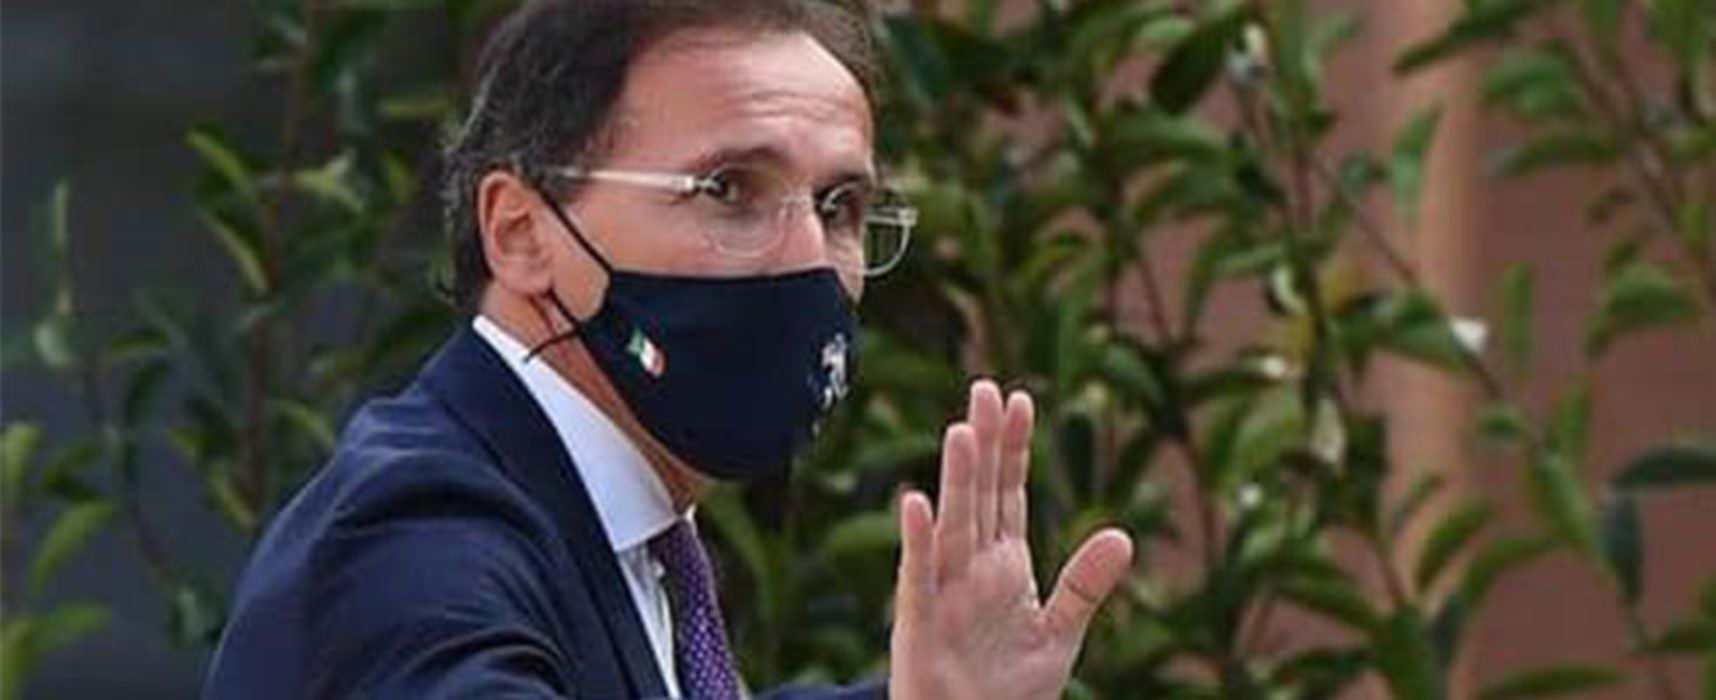 Francesco Boccia lascia Ministero Affari Regionali a Gelmini: “Continuerò a servire il Paese”